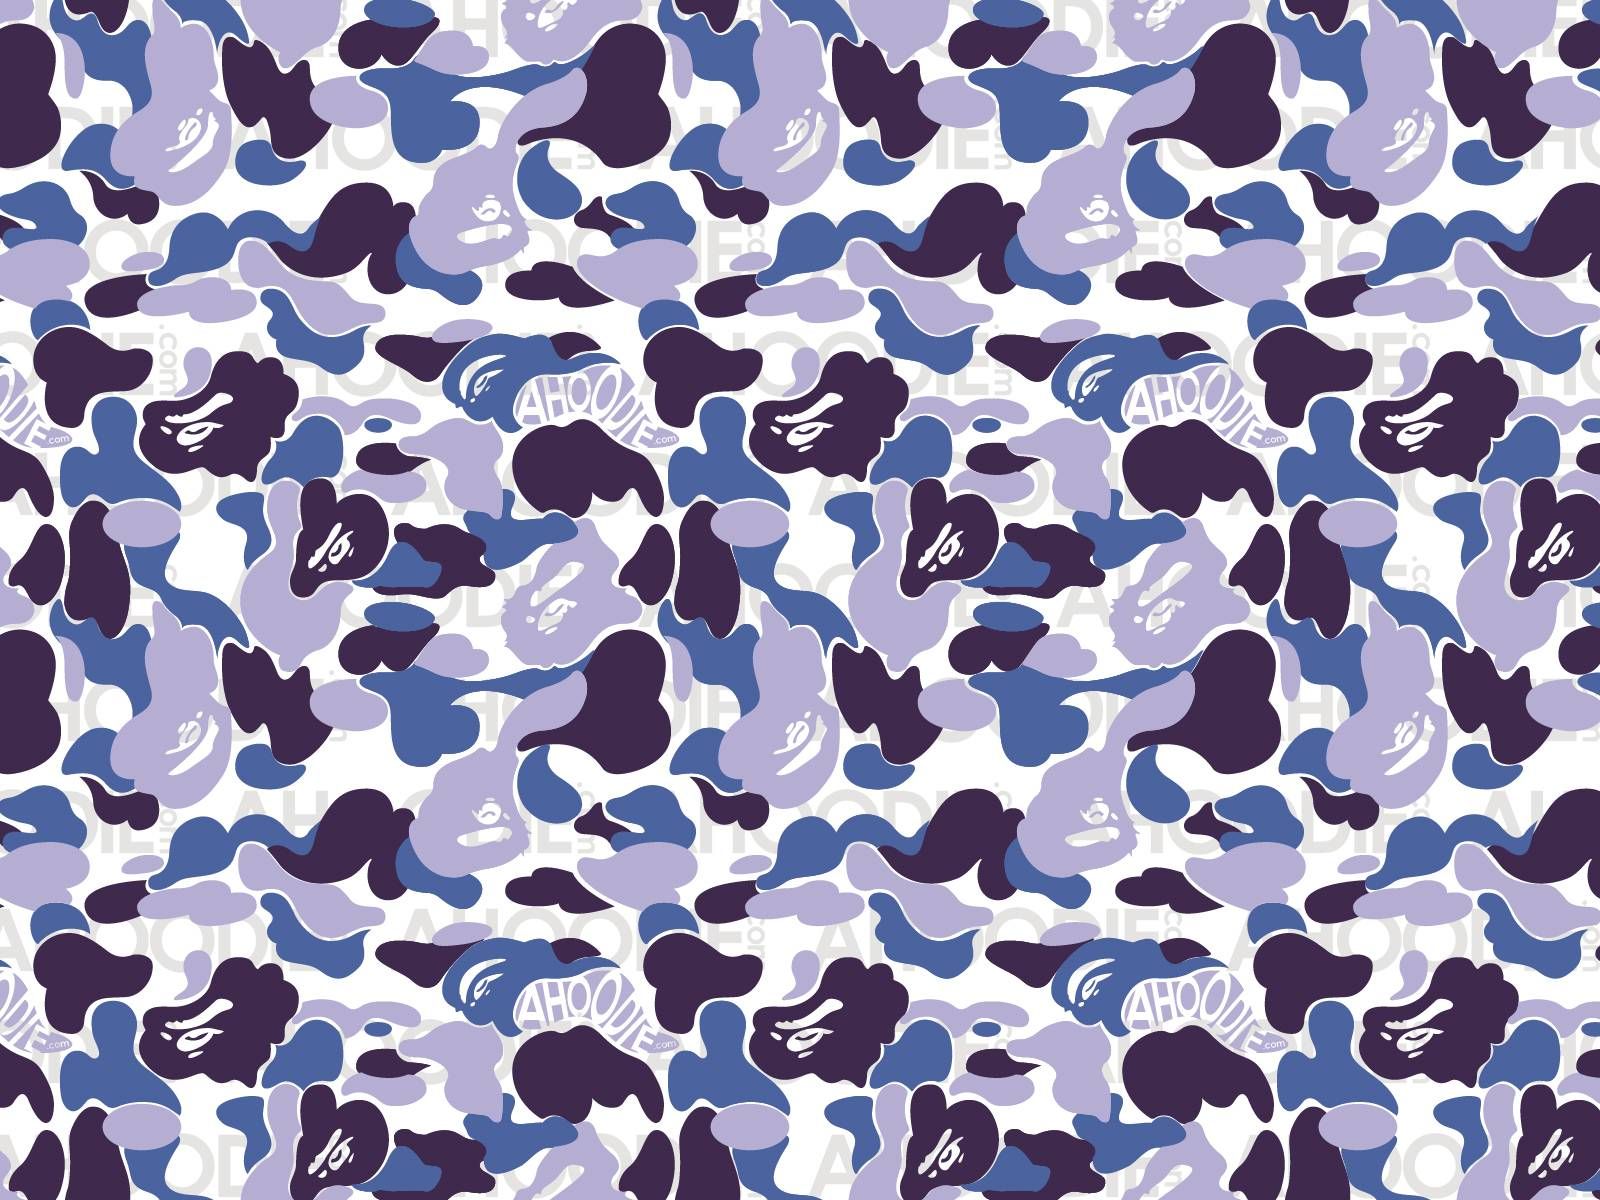 Bape Camo Wallpaper. Camouflage wallpaper, Camo wallpaper, Bape wallpaper